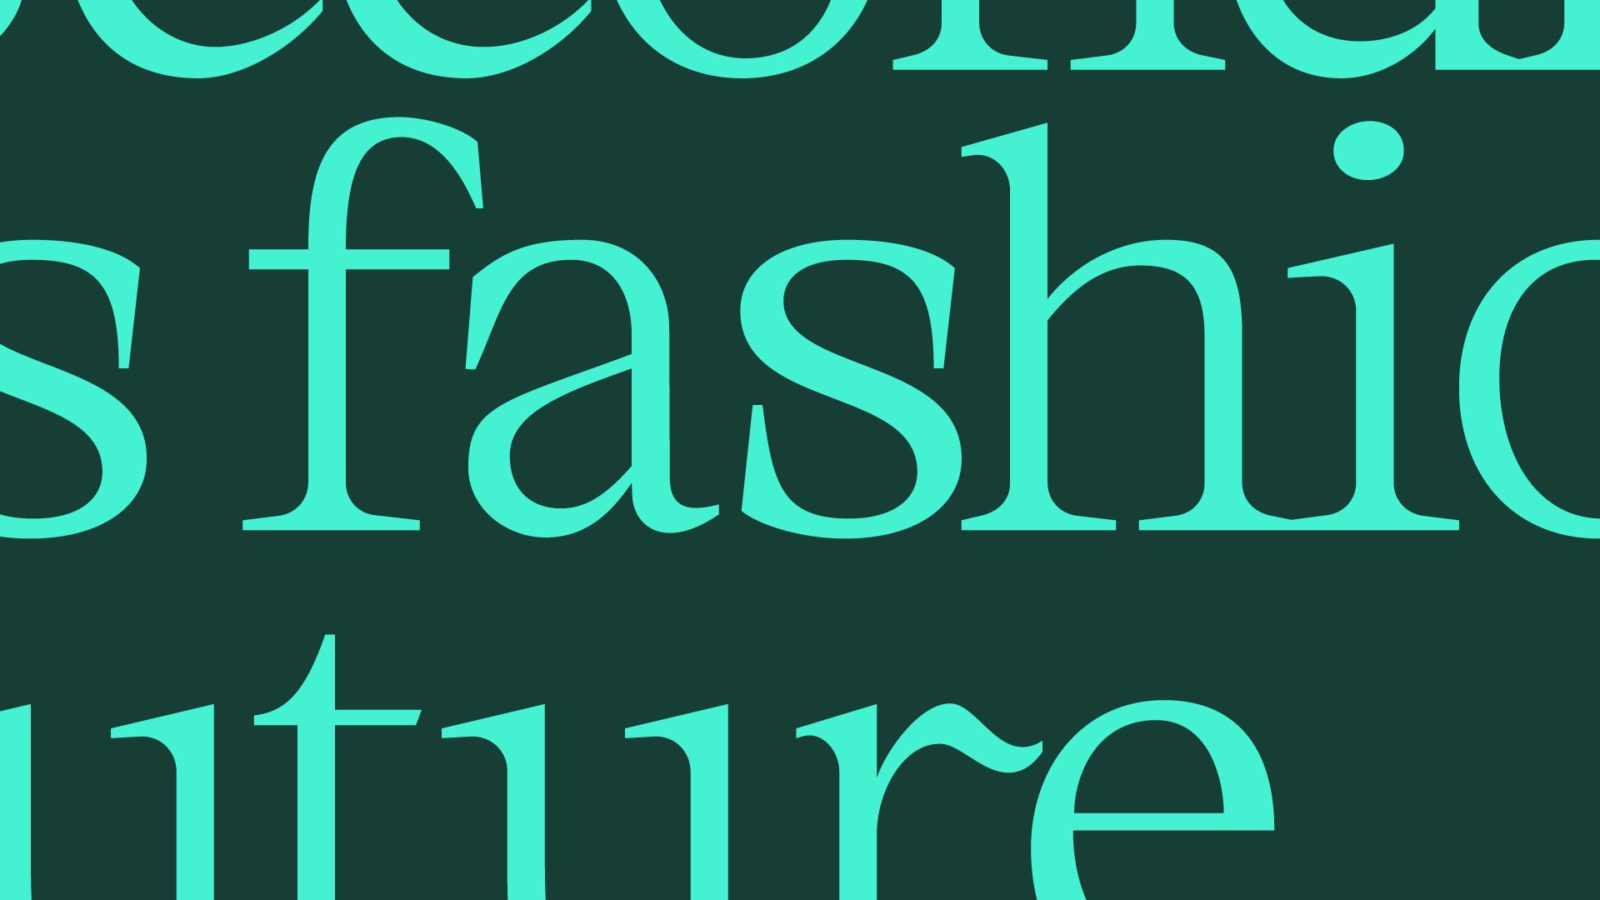 Helpsy rebrand typography sample